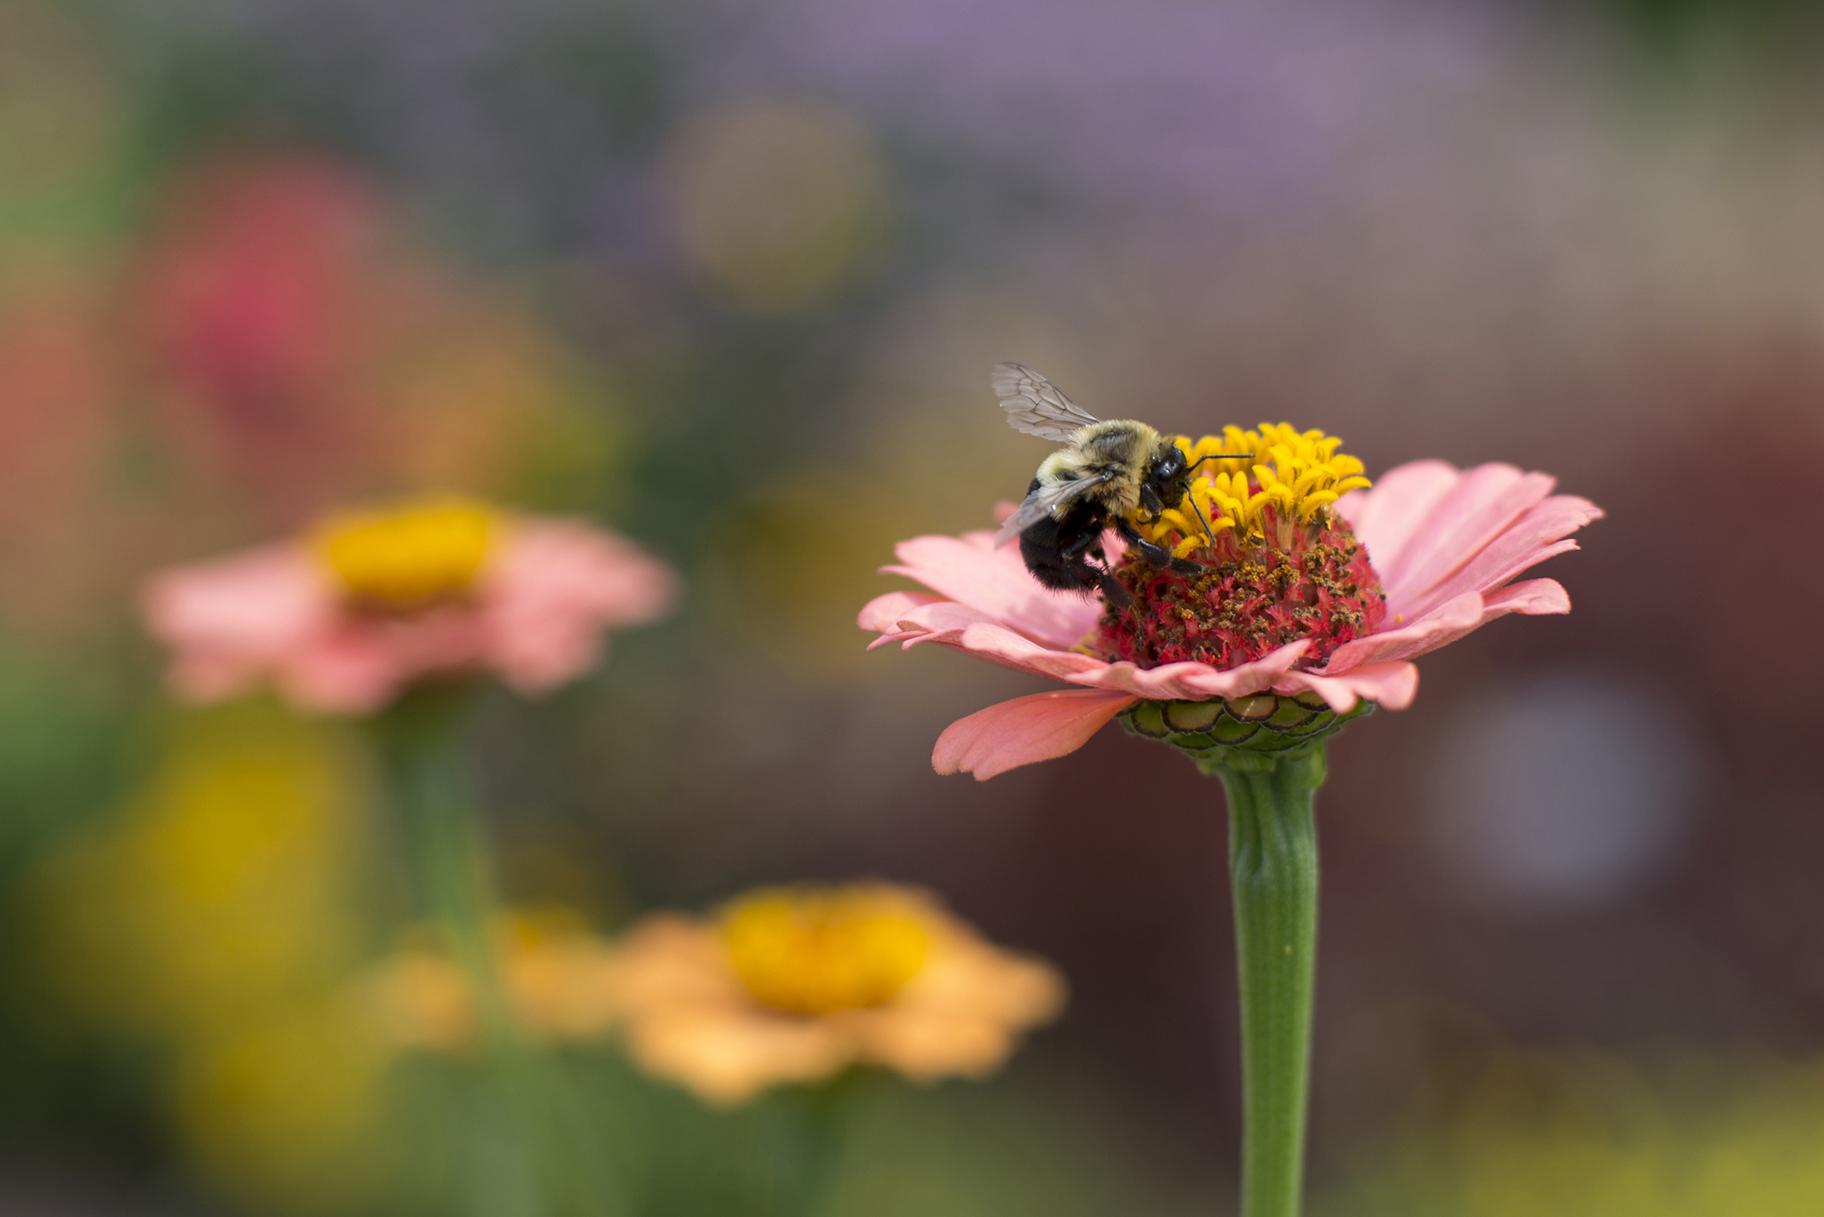 A bumblebee lands on a flower. (Courtesy Chicago Botanic Garden) 